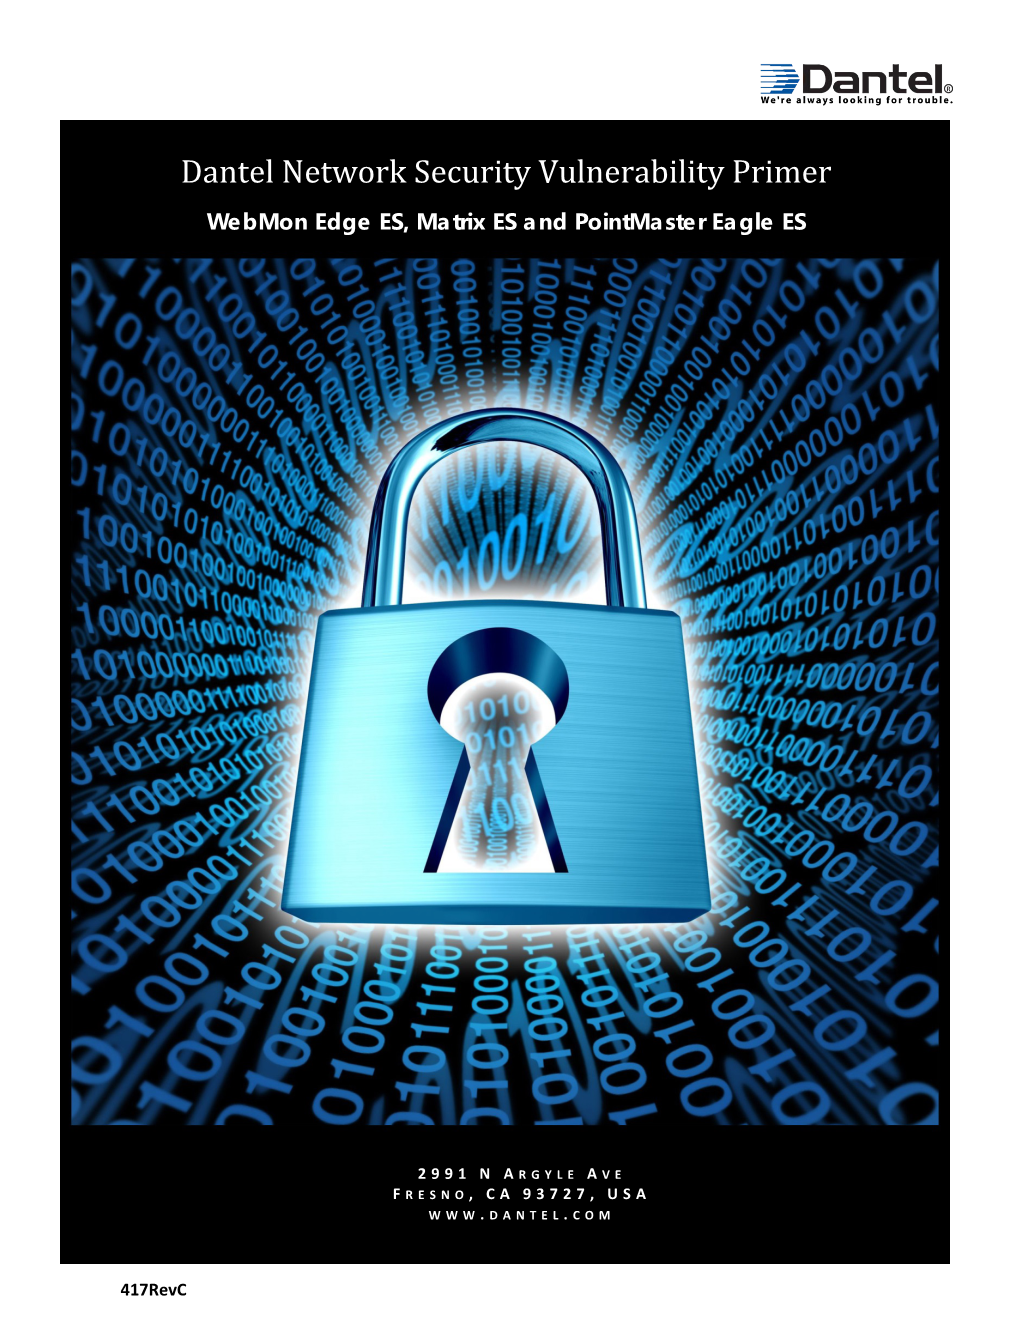 Dantel Network Security Vulnerability Primer Webmon Edge ES, Matrix ES and Pointmaster Eagle ES